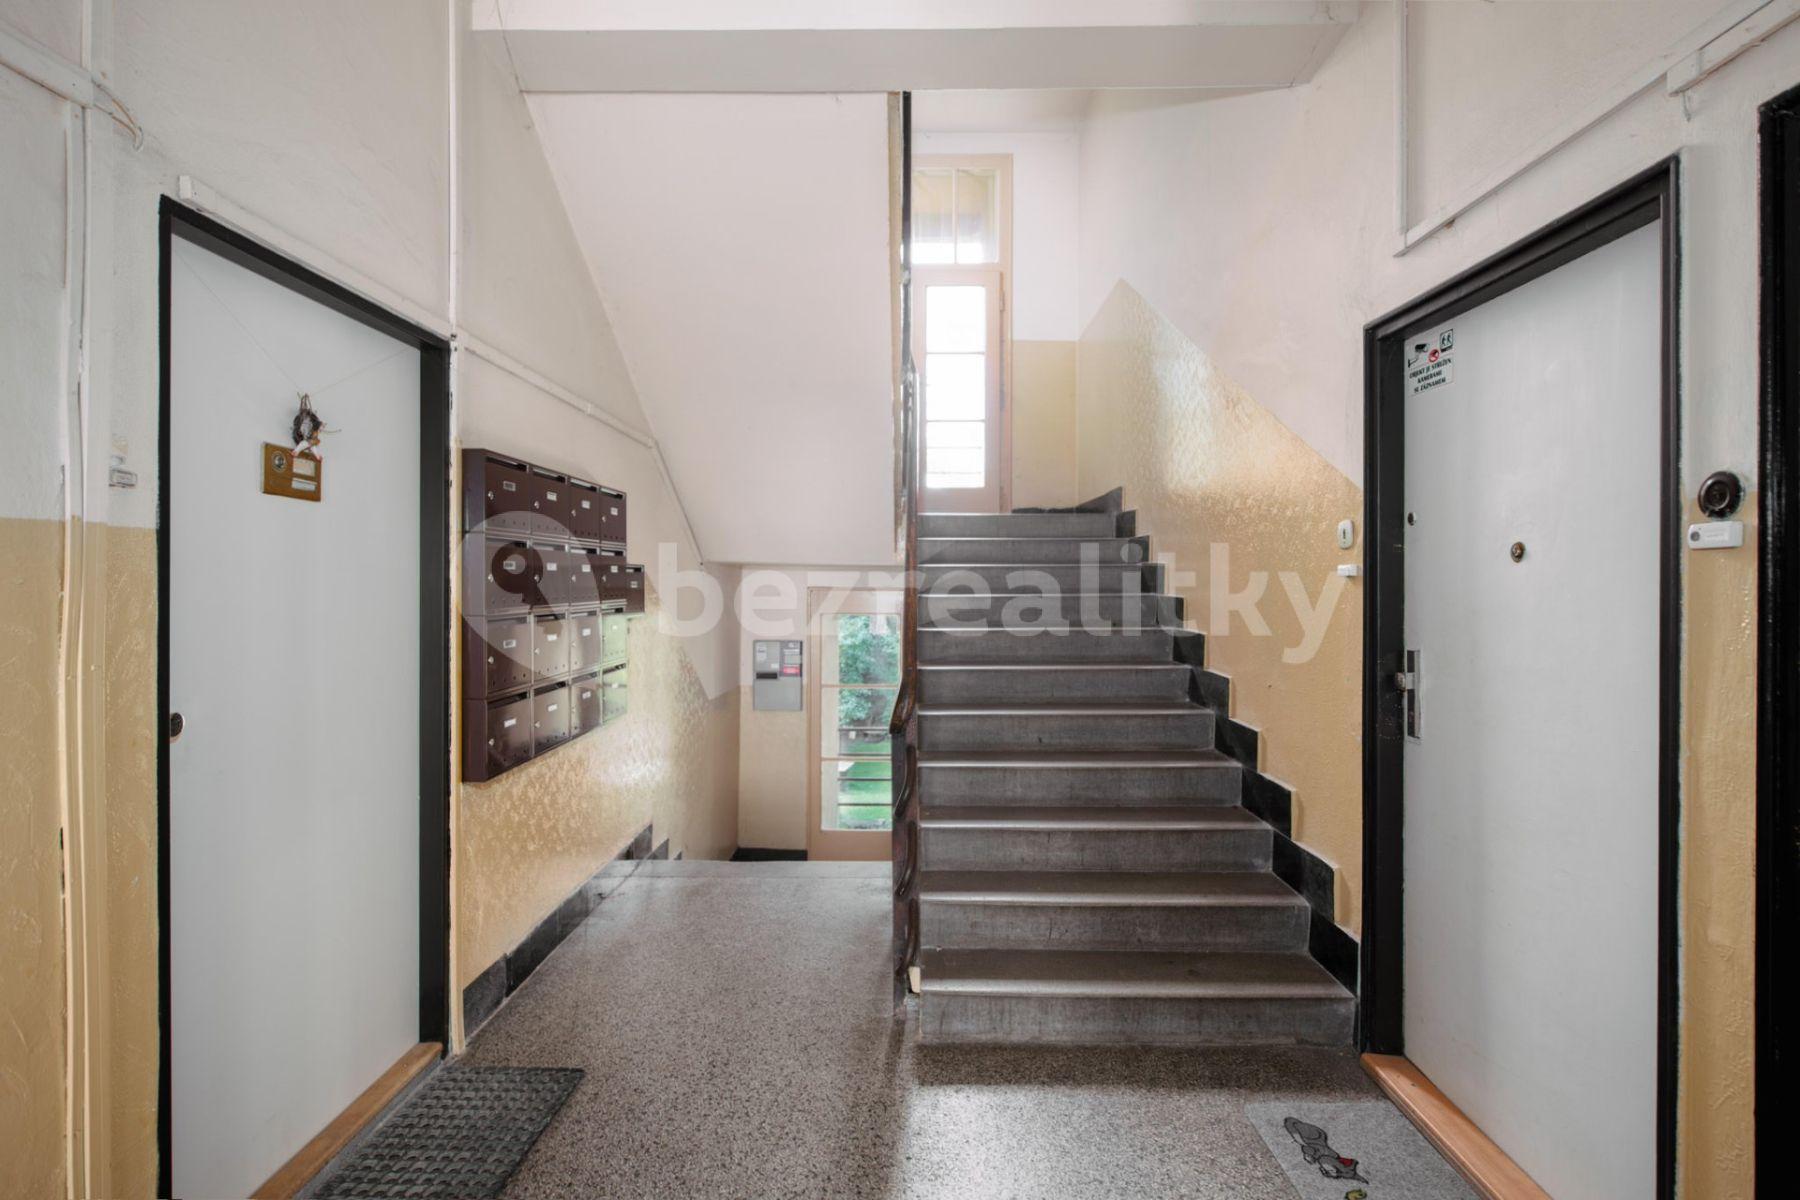 1 bedroom with open-plan kitchen flat for sale, 52 m², Hanusova, Prague, Prague